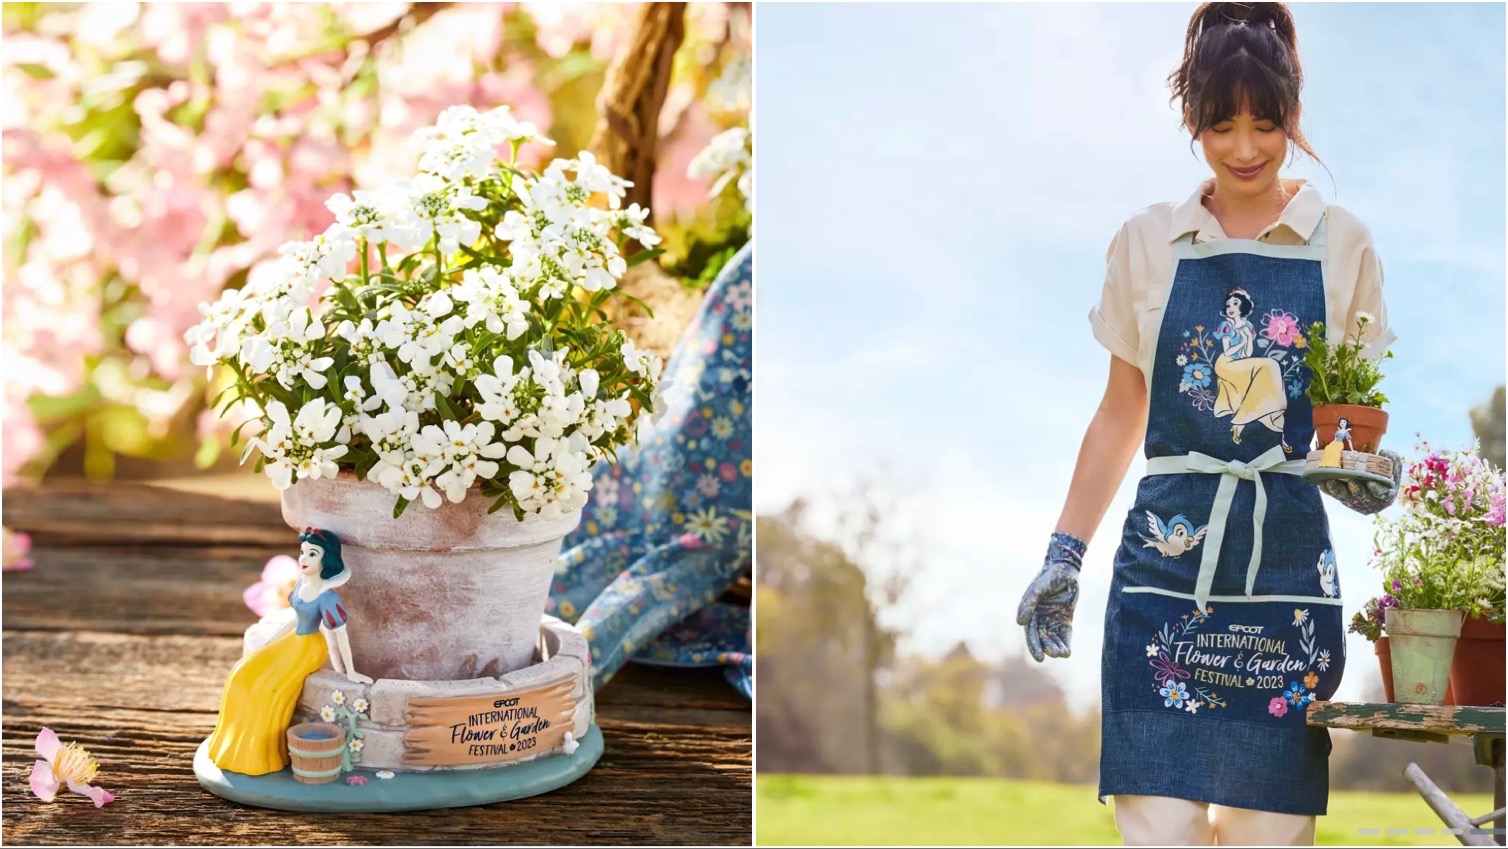 Create An Enchanting Garden With The New Snow White Flower & Garden Festival Collection!